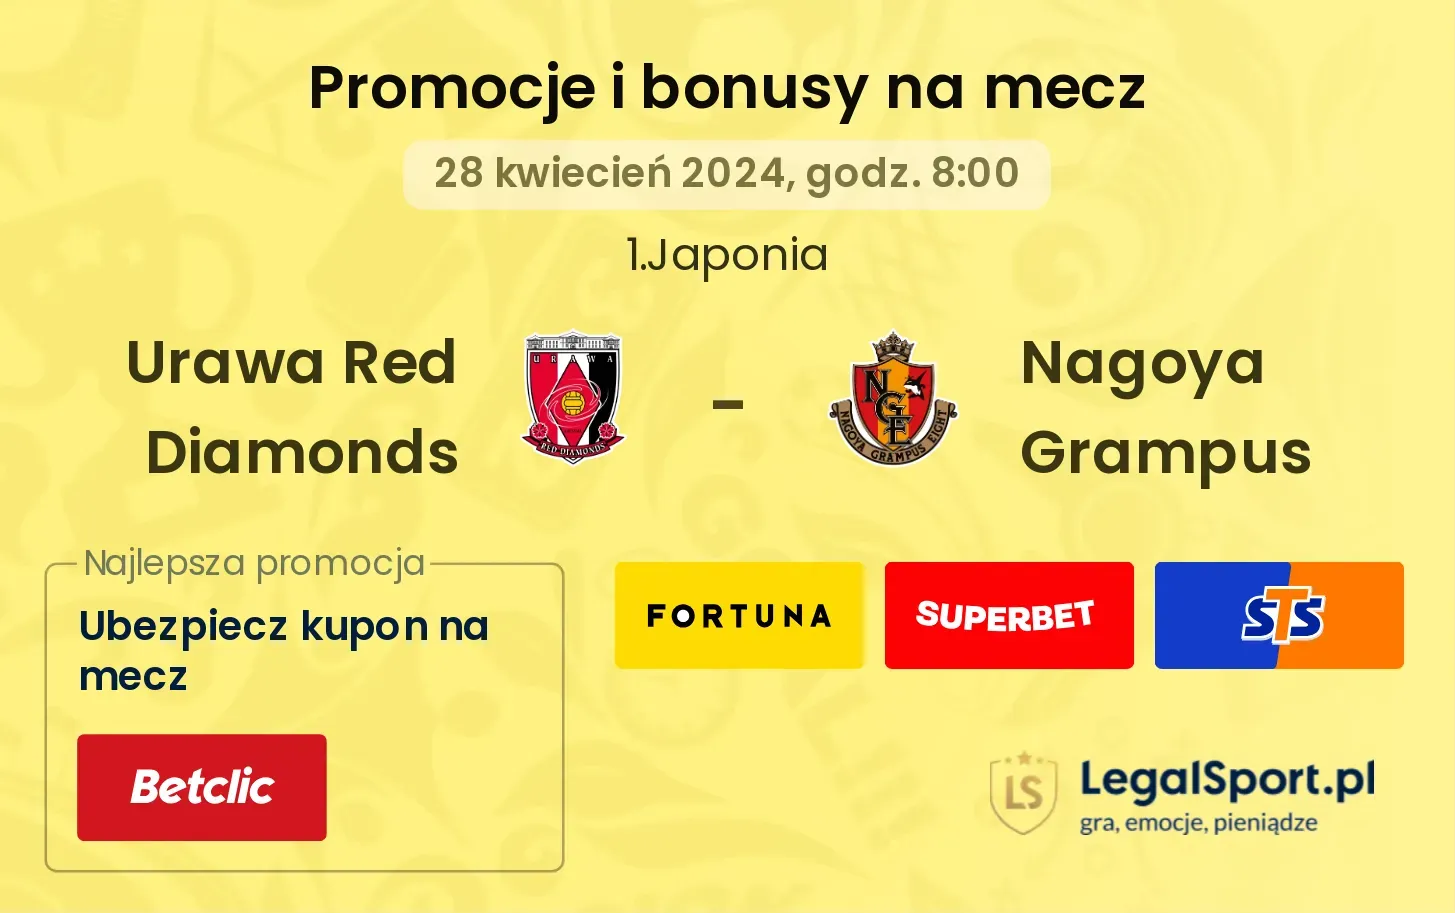 Urawa Red Diamonds - Nagoya Grampus promocje bonusy na mecz